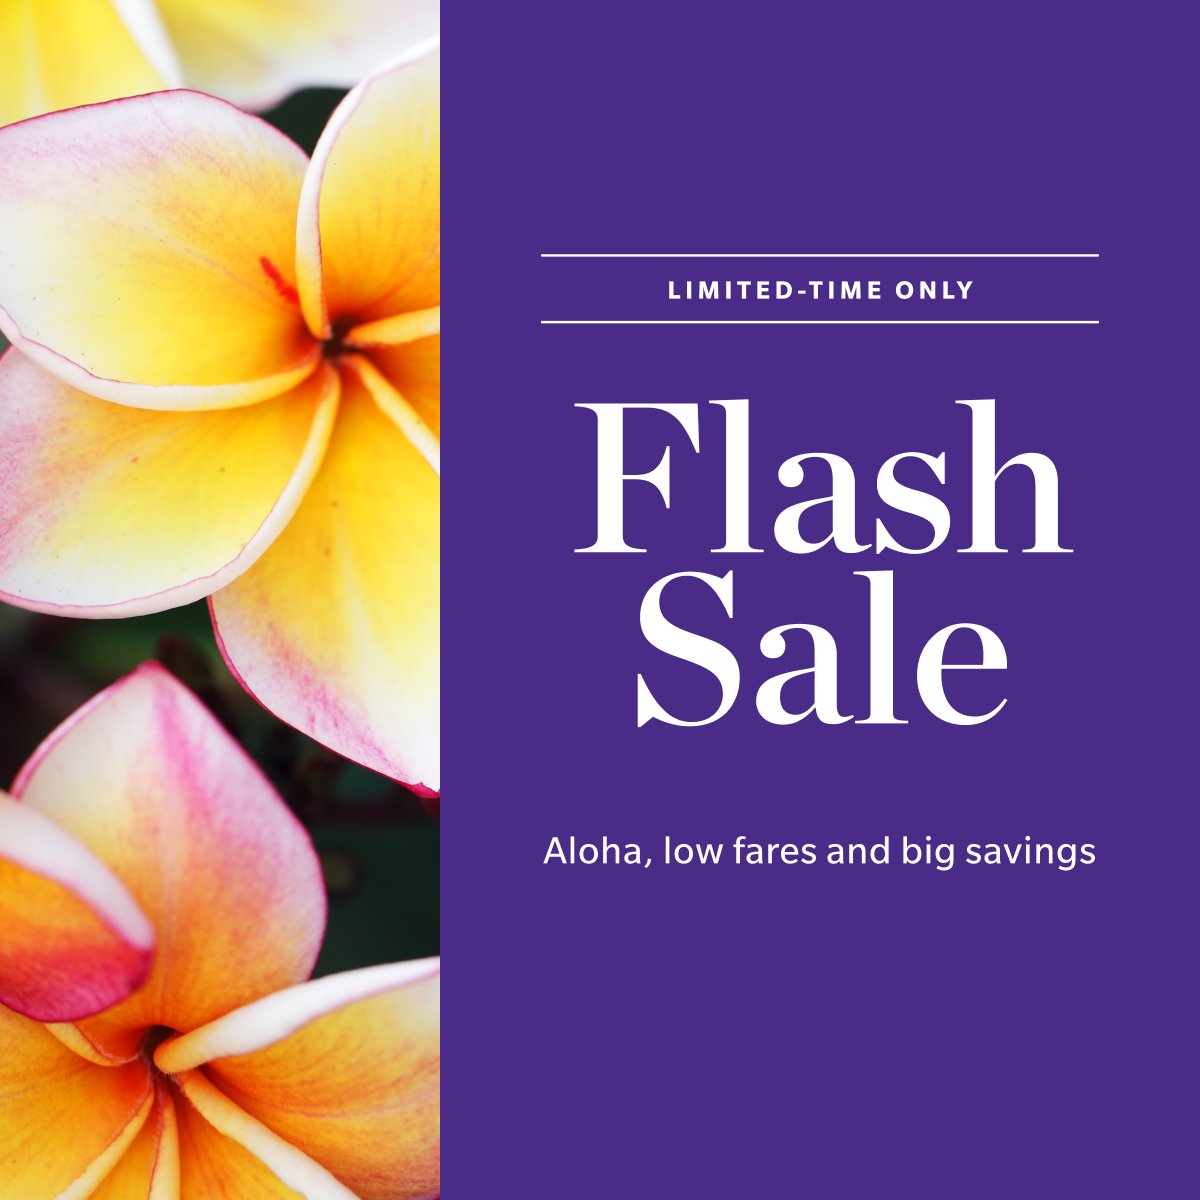 Flash sale savings